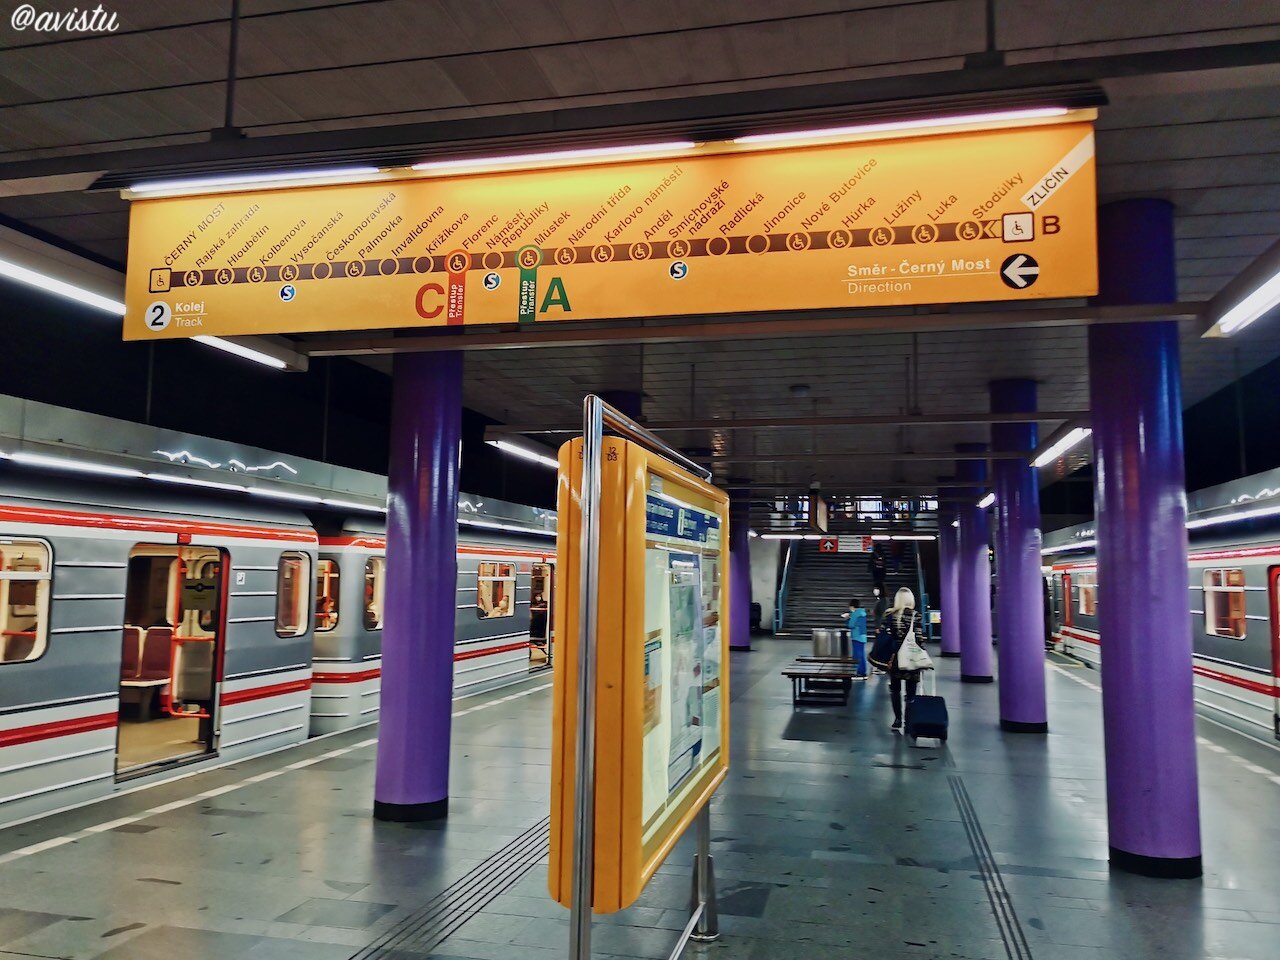 Interior de la Estación de Metro de Zličín en Praga [(c)Foto: @avistu]